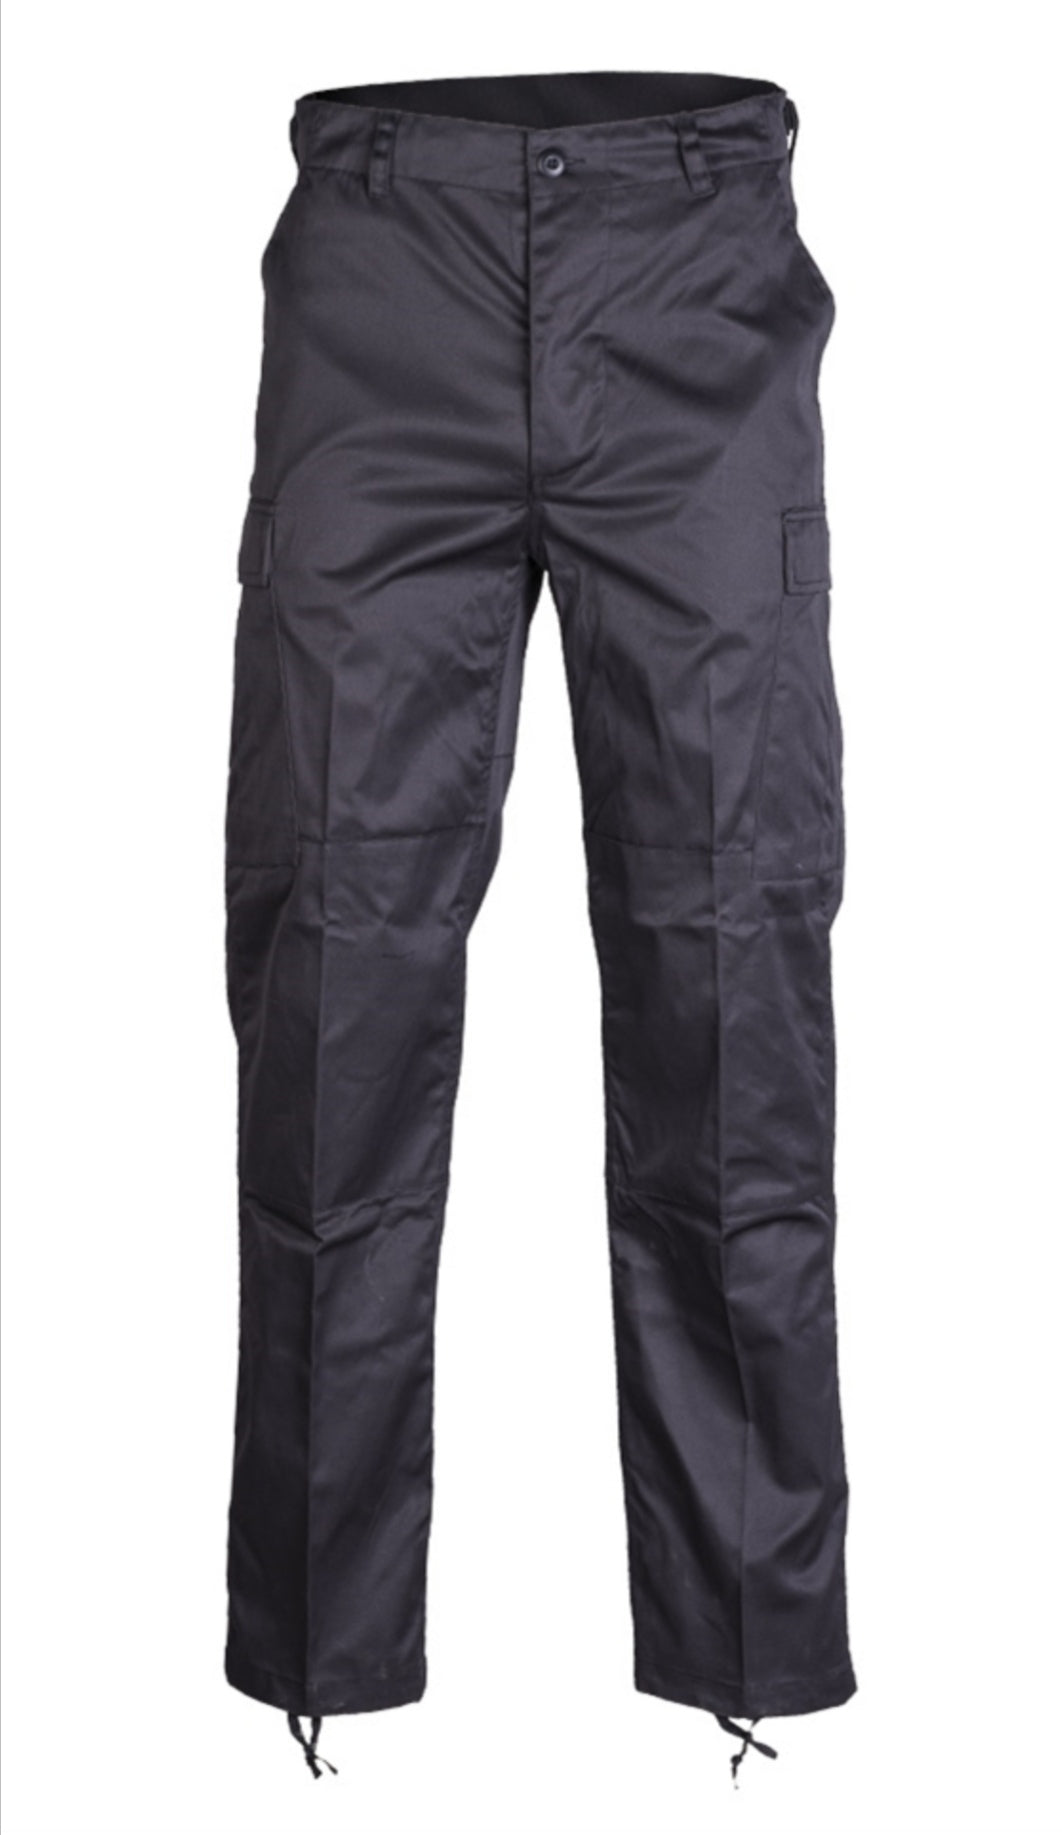 US Black BDU style trousers - Miltec